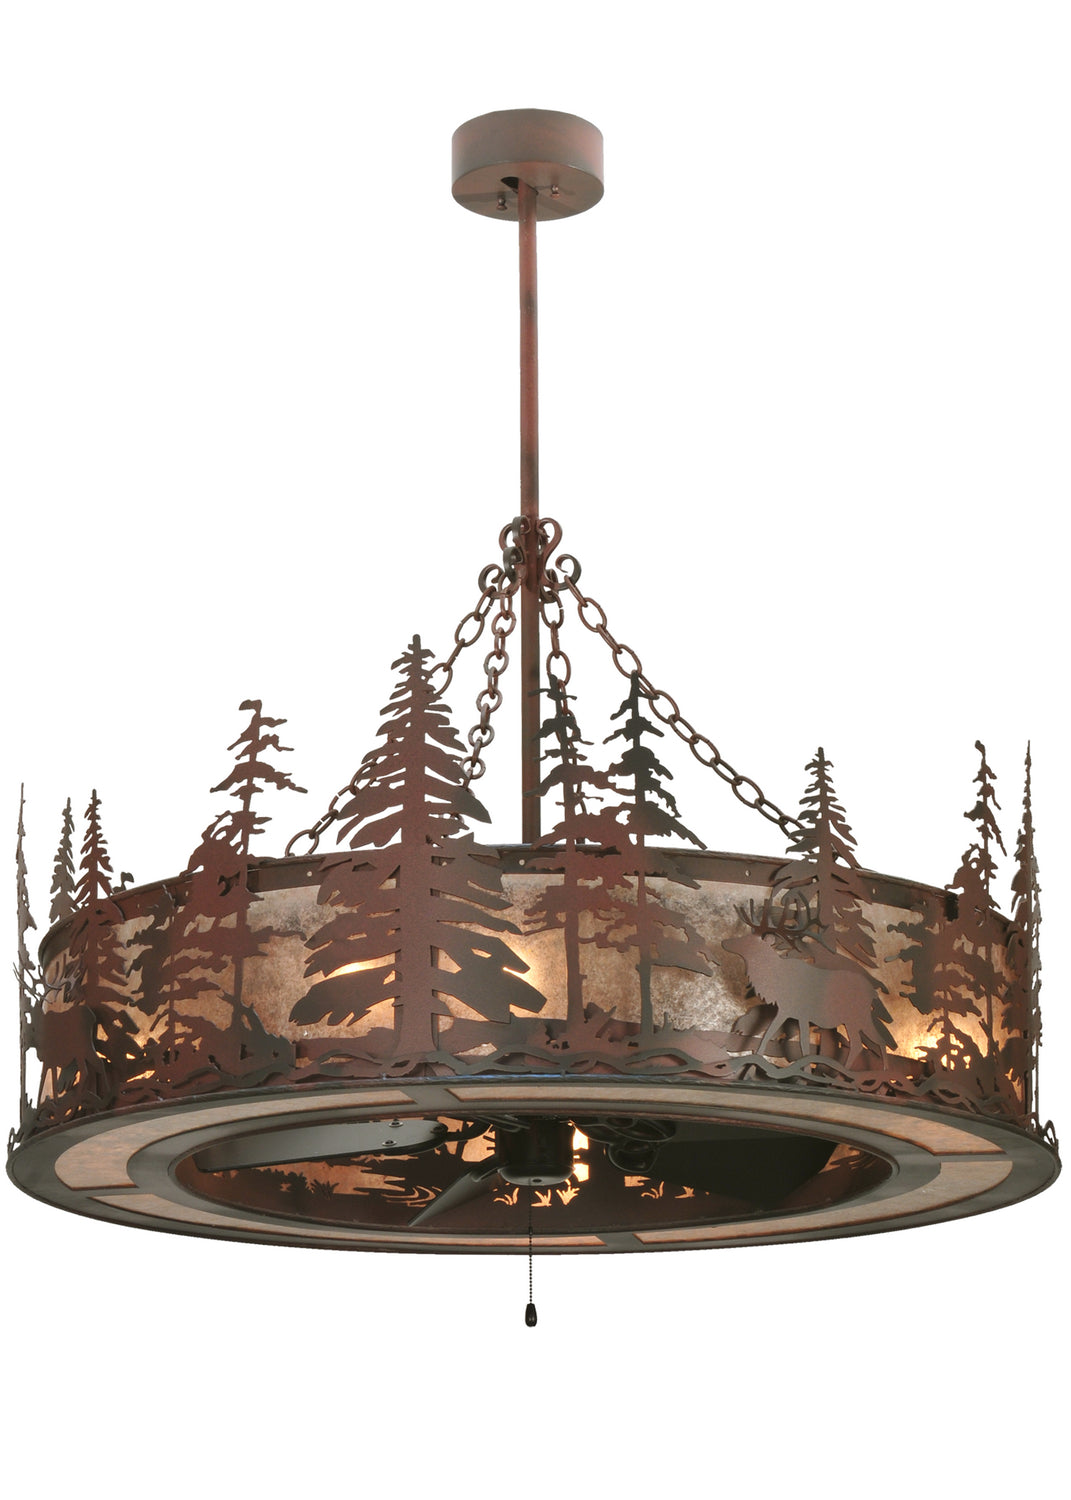 Meyda Tiffany Elk At Dusk 144299 Ceiling Fan - Rust, Wrought Iron